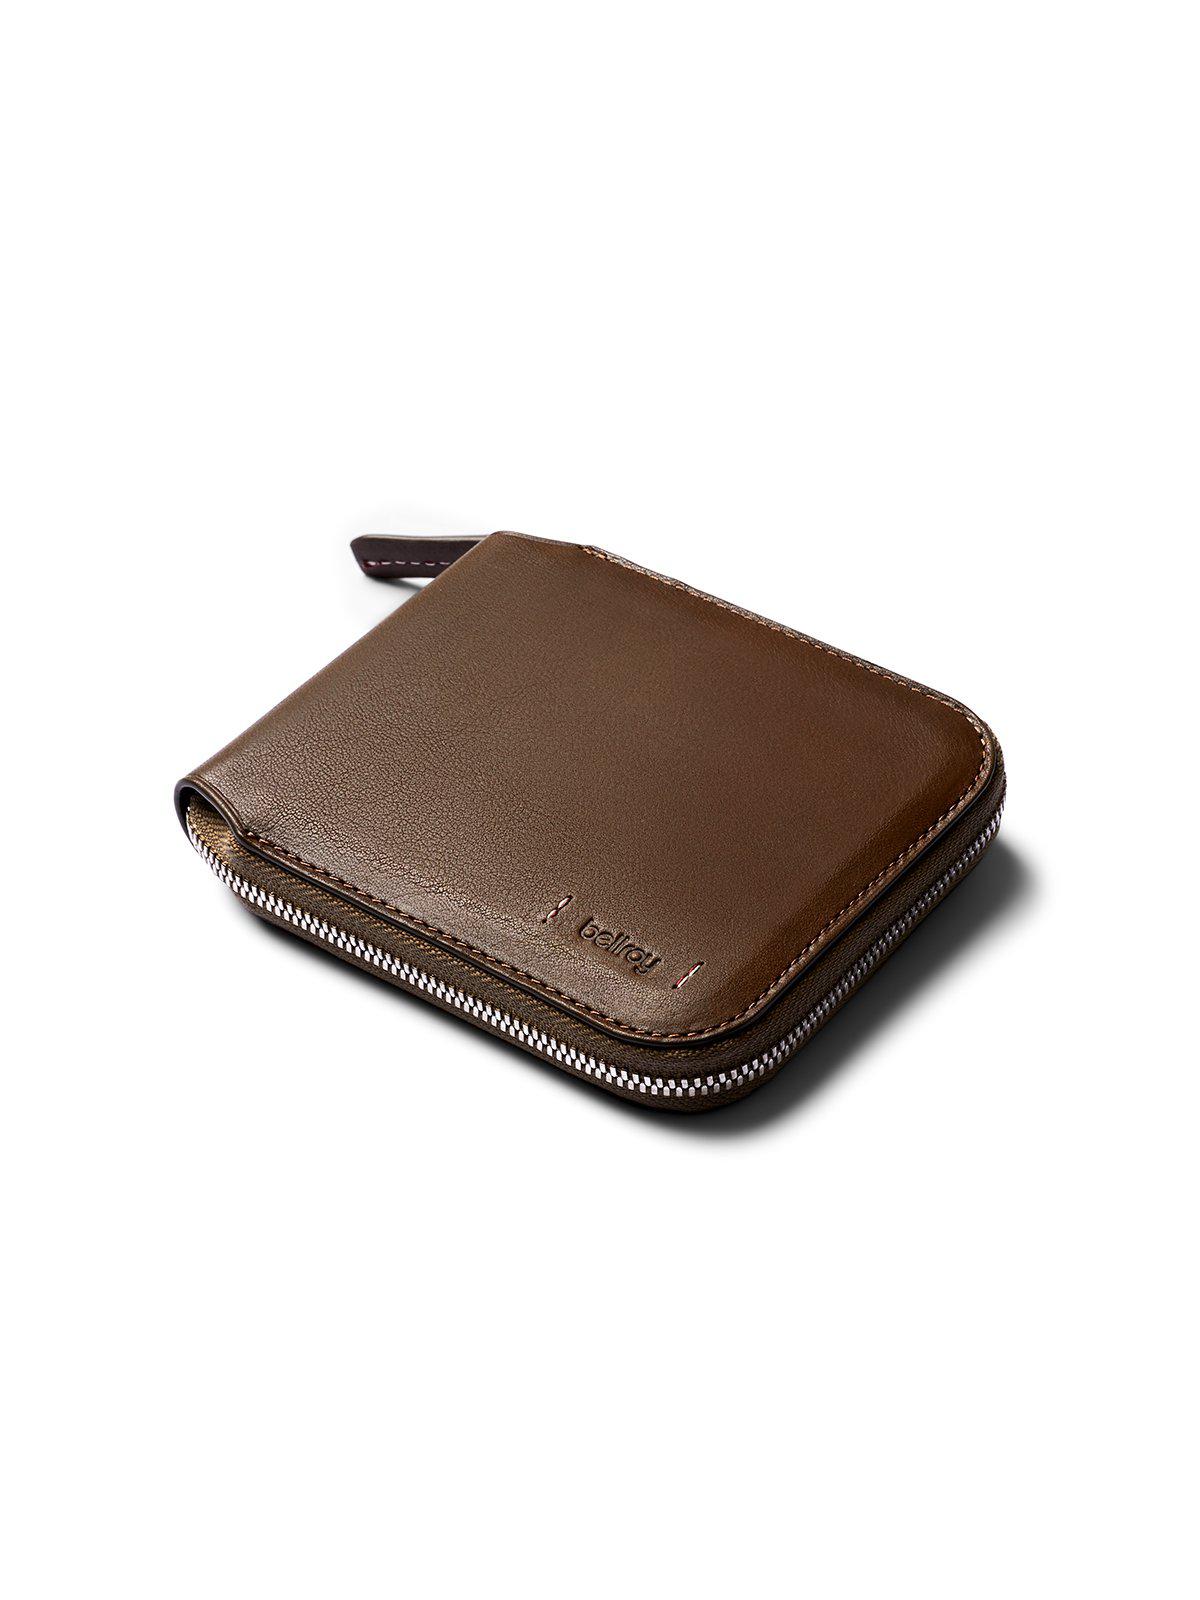 Bellroy Zip Wallet Premium Edition Darkwood RFID